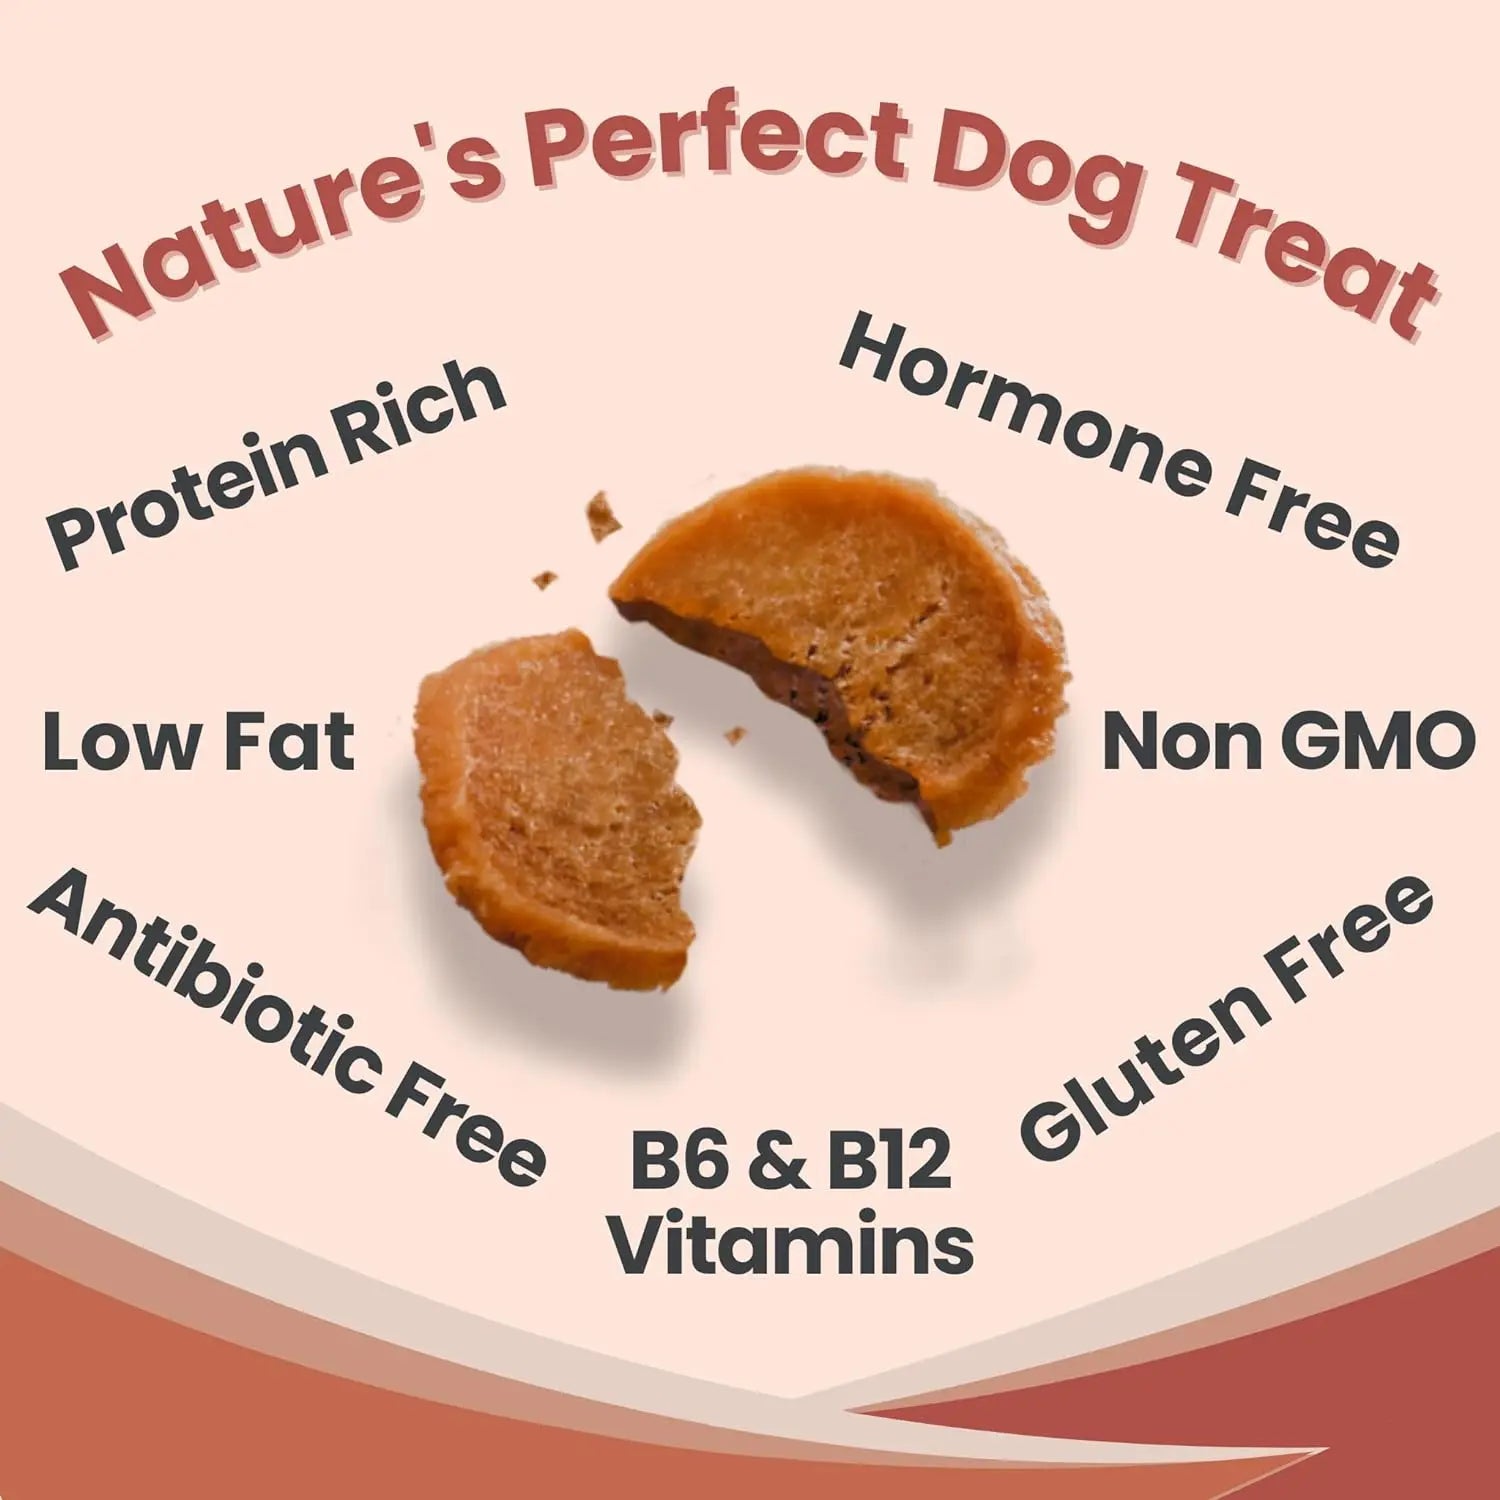 Farm To Pet Turkey Chips Single Ingredient Healthy Dog Treats Farm To Pet